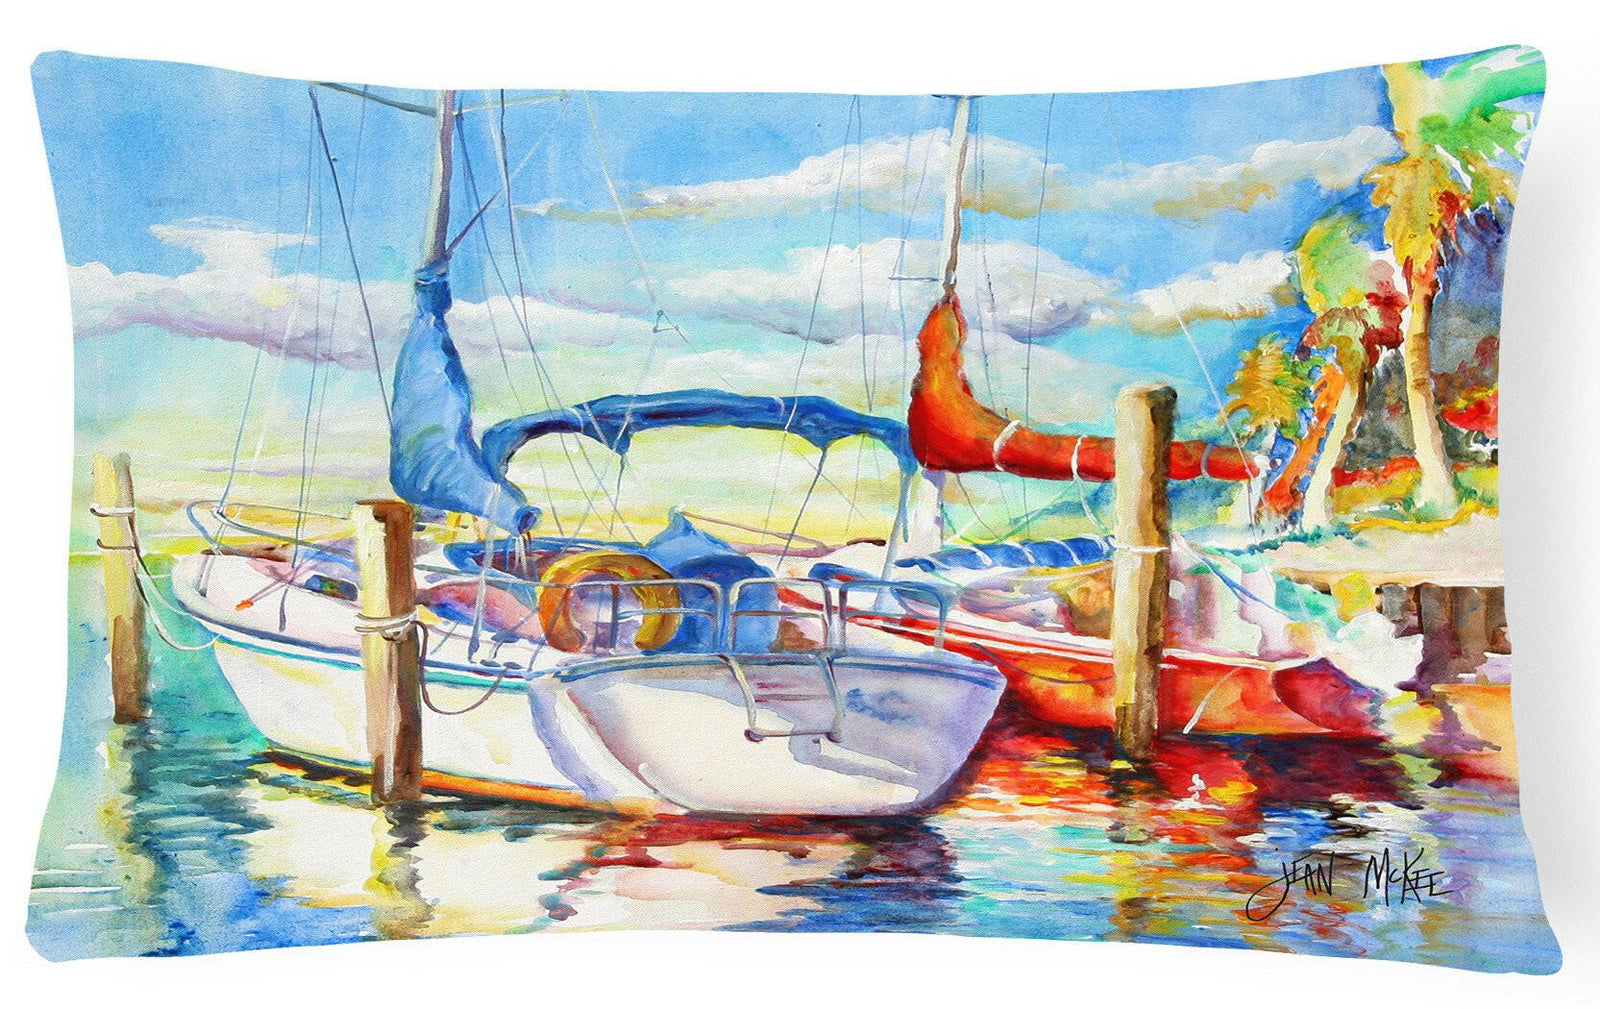 Towering Q Sailboat Canvas Fabric Decorative Pillow JMK1088PW1216 by Caroline's Treasures